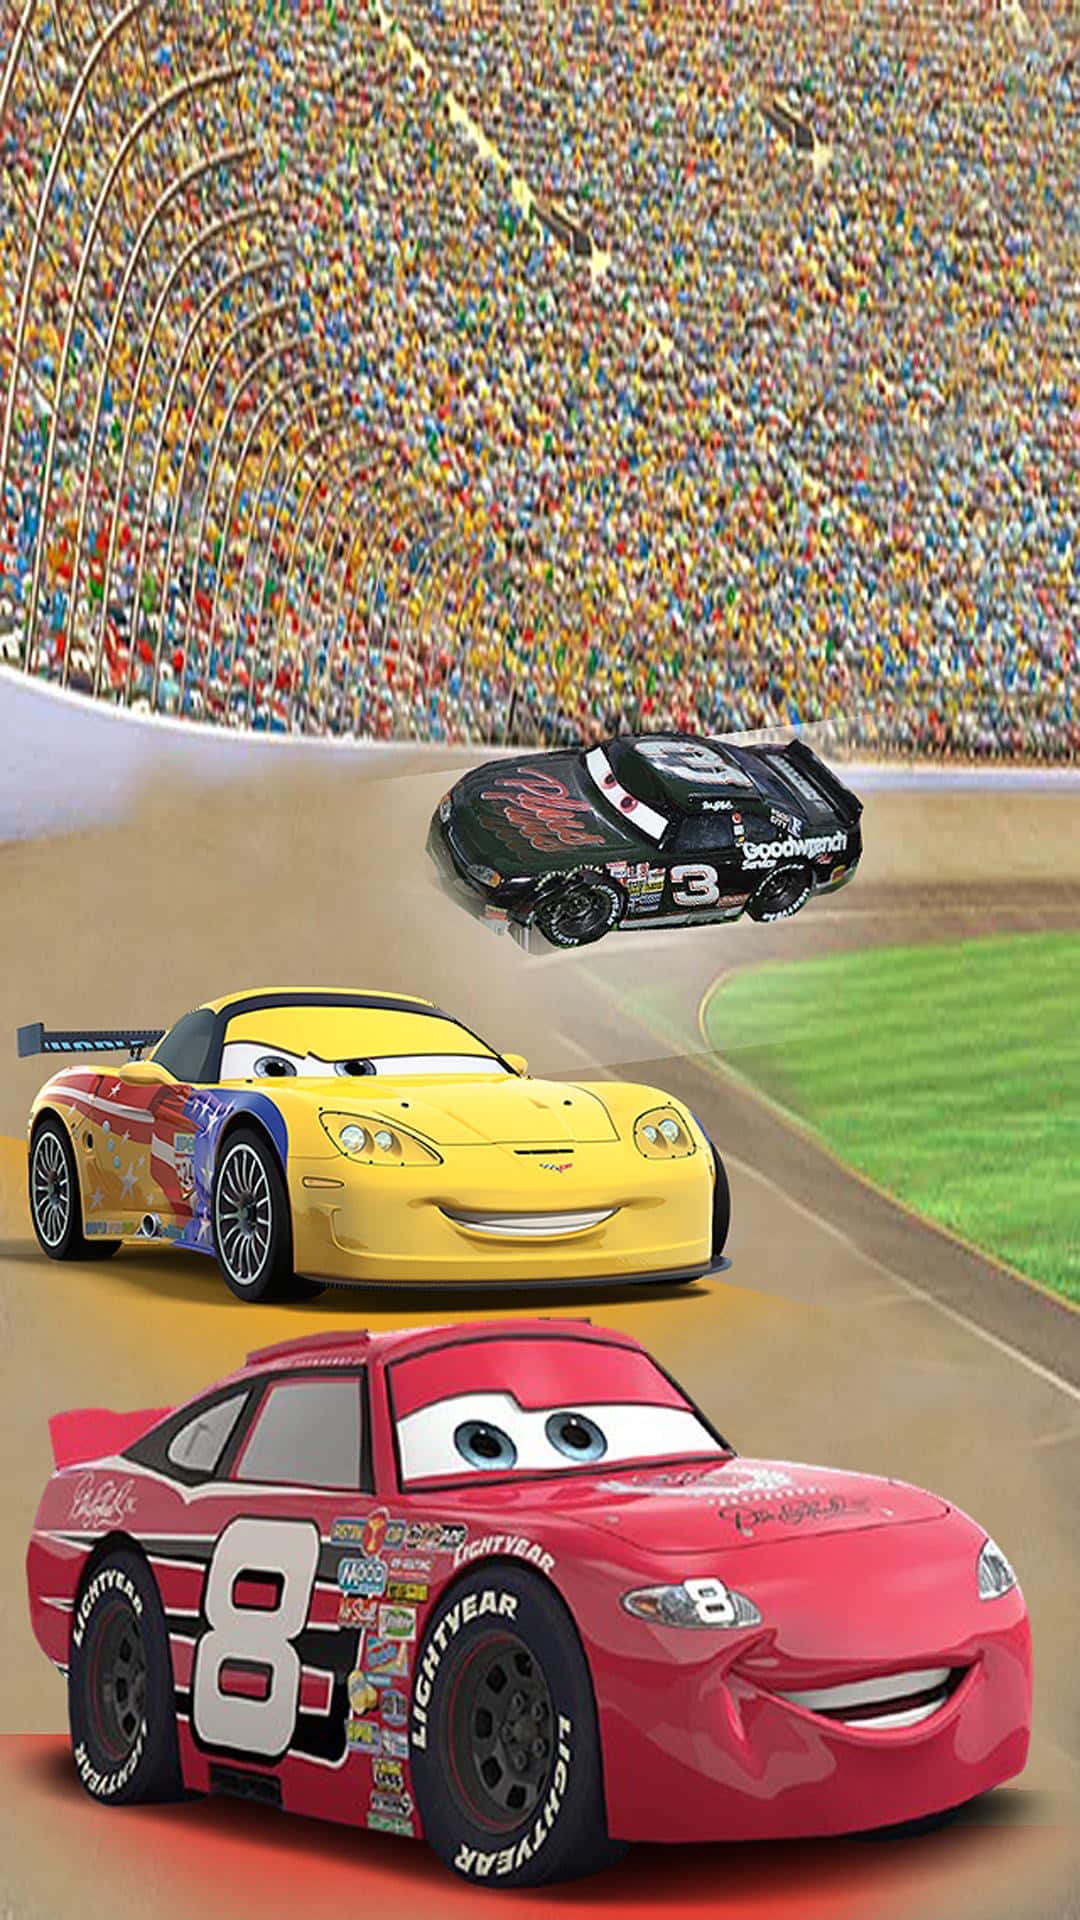 Disney Cars Racing In A Stadium